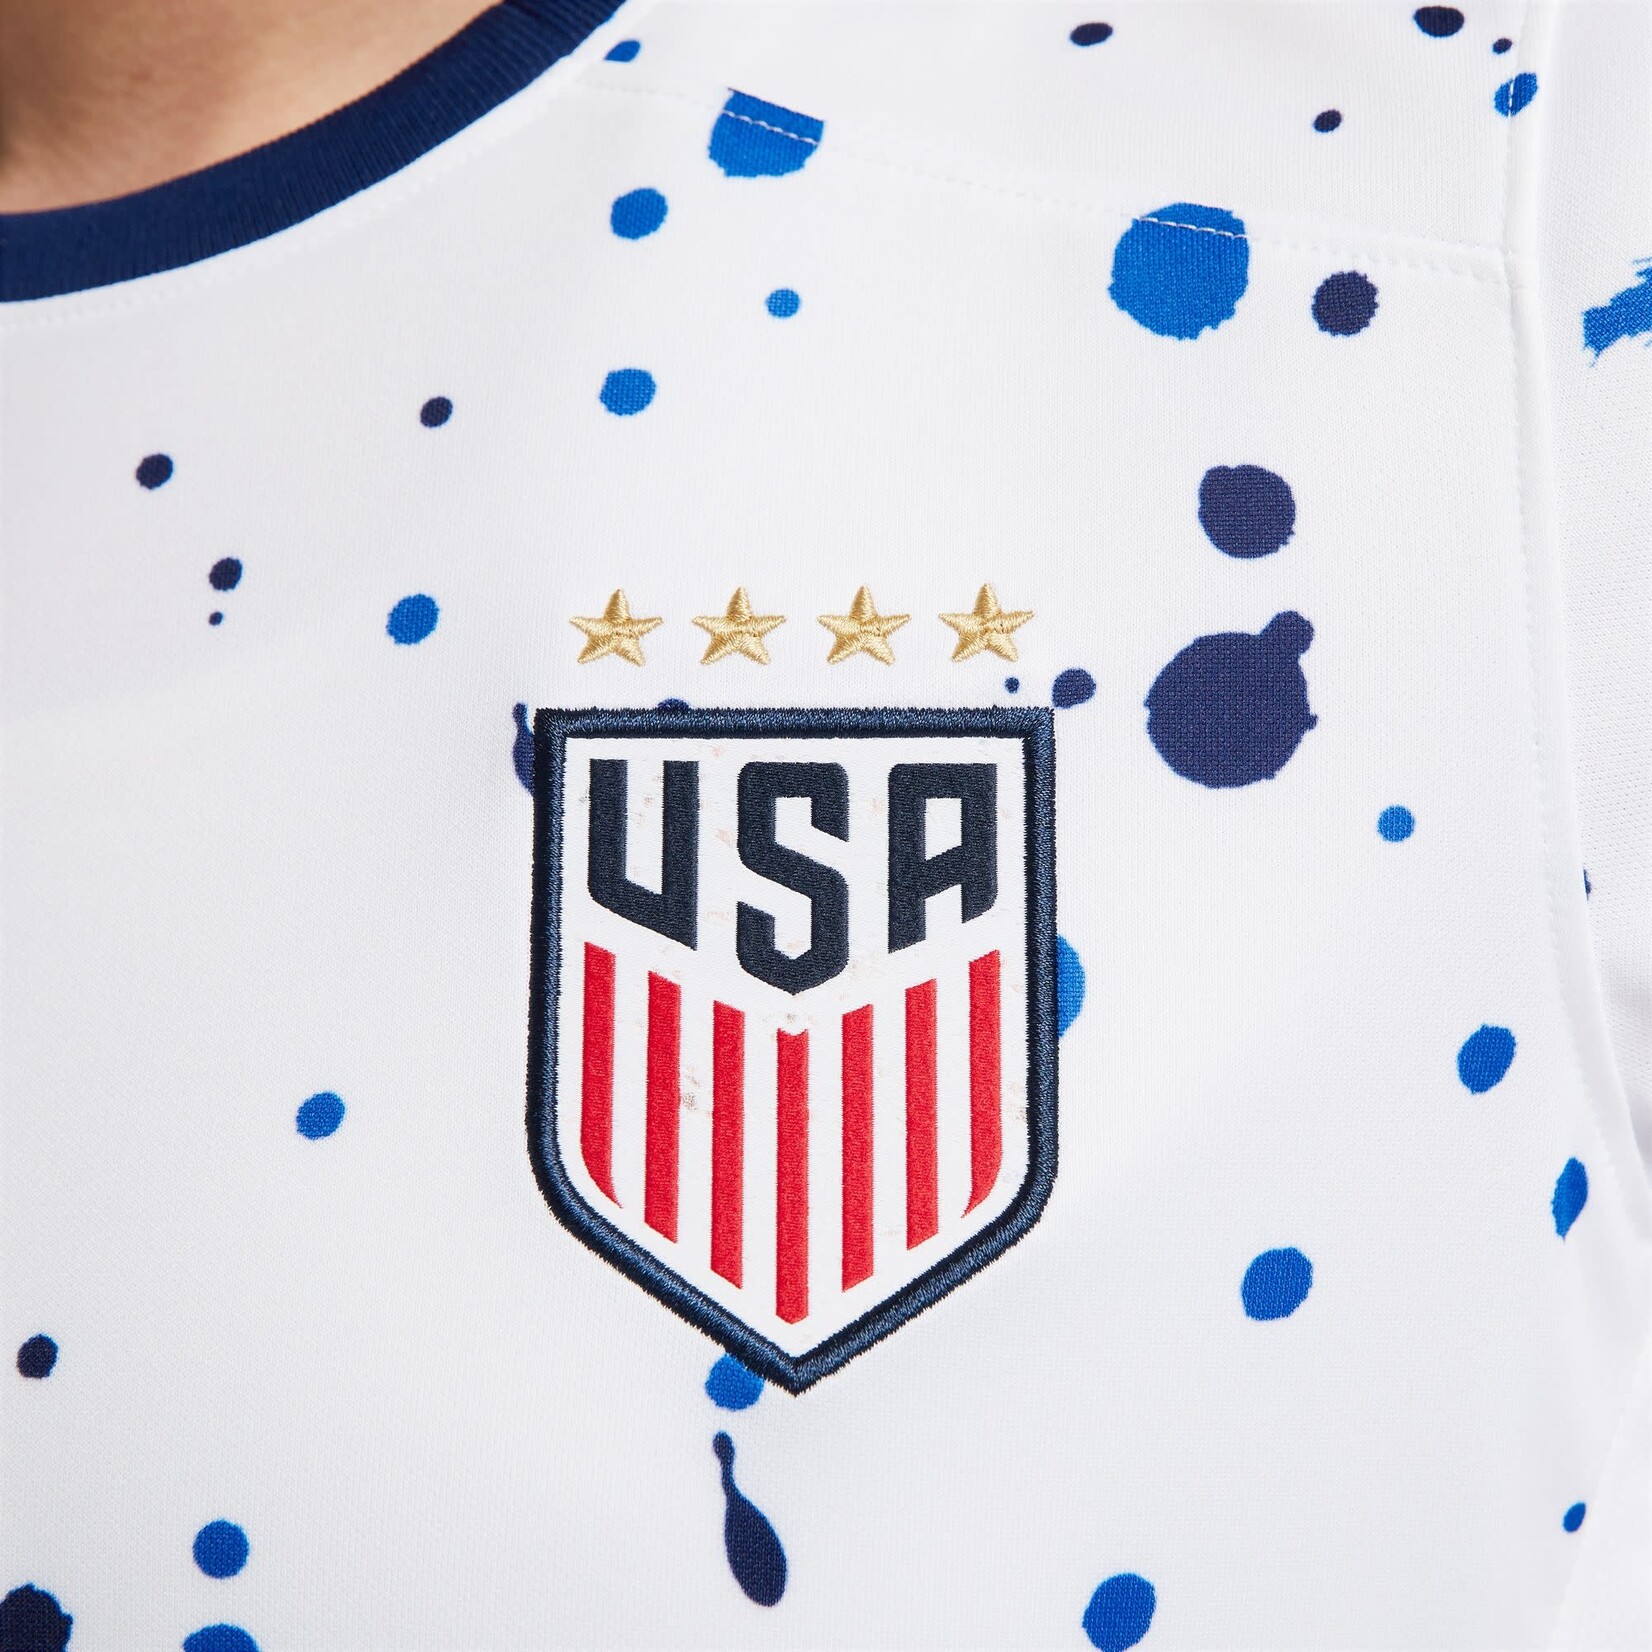 2022 U.S. Soccer jerseys released - Stars and Stripes FC